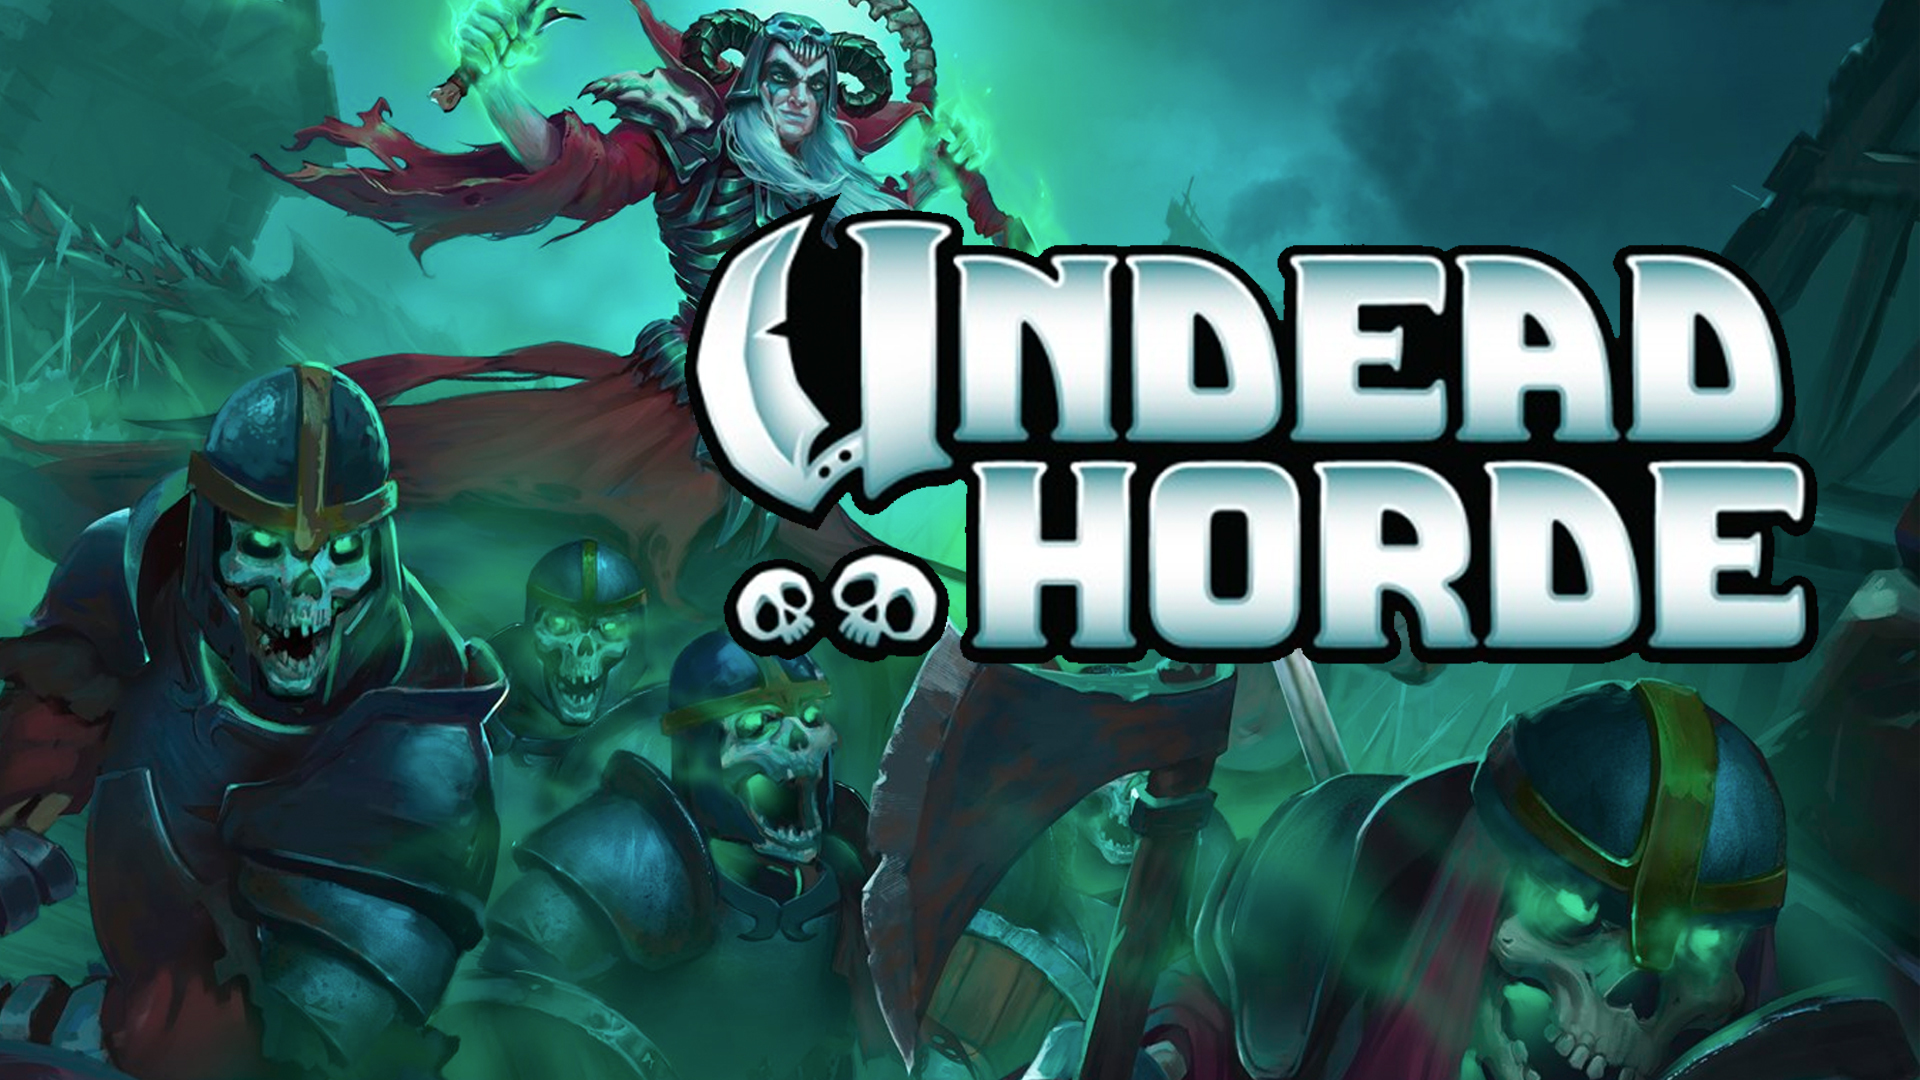 for mac download Undead Horde